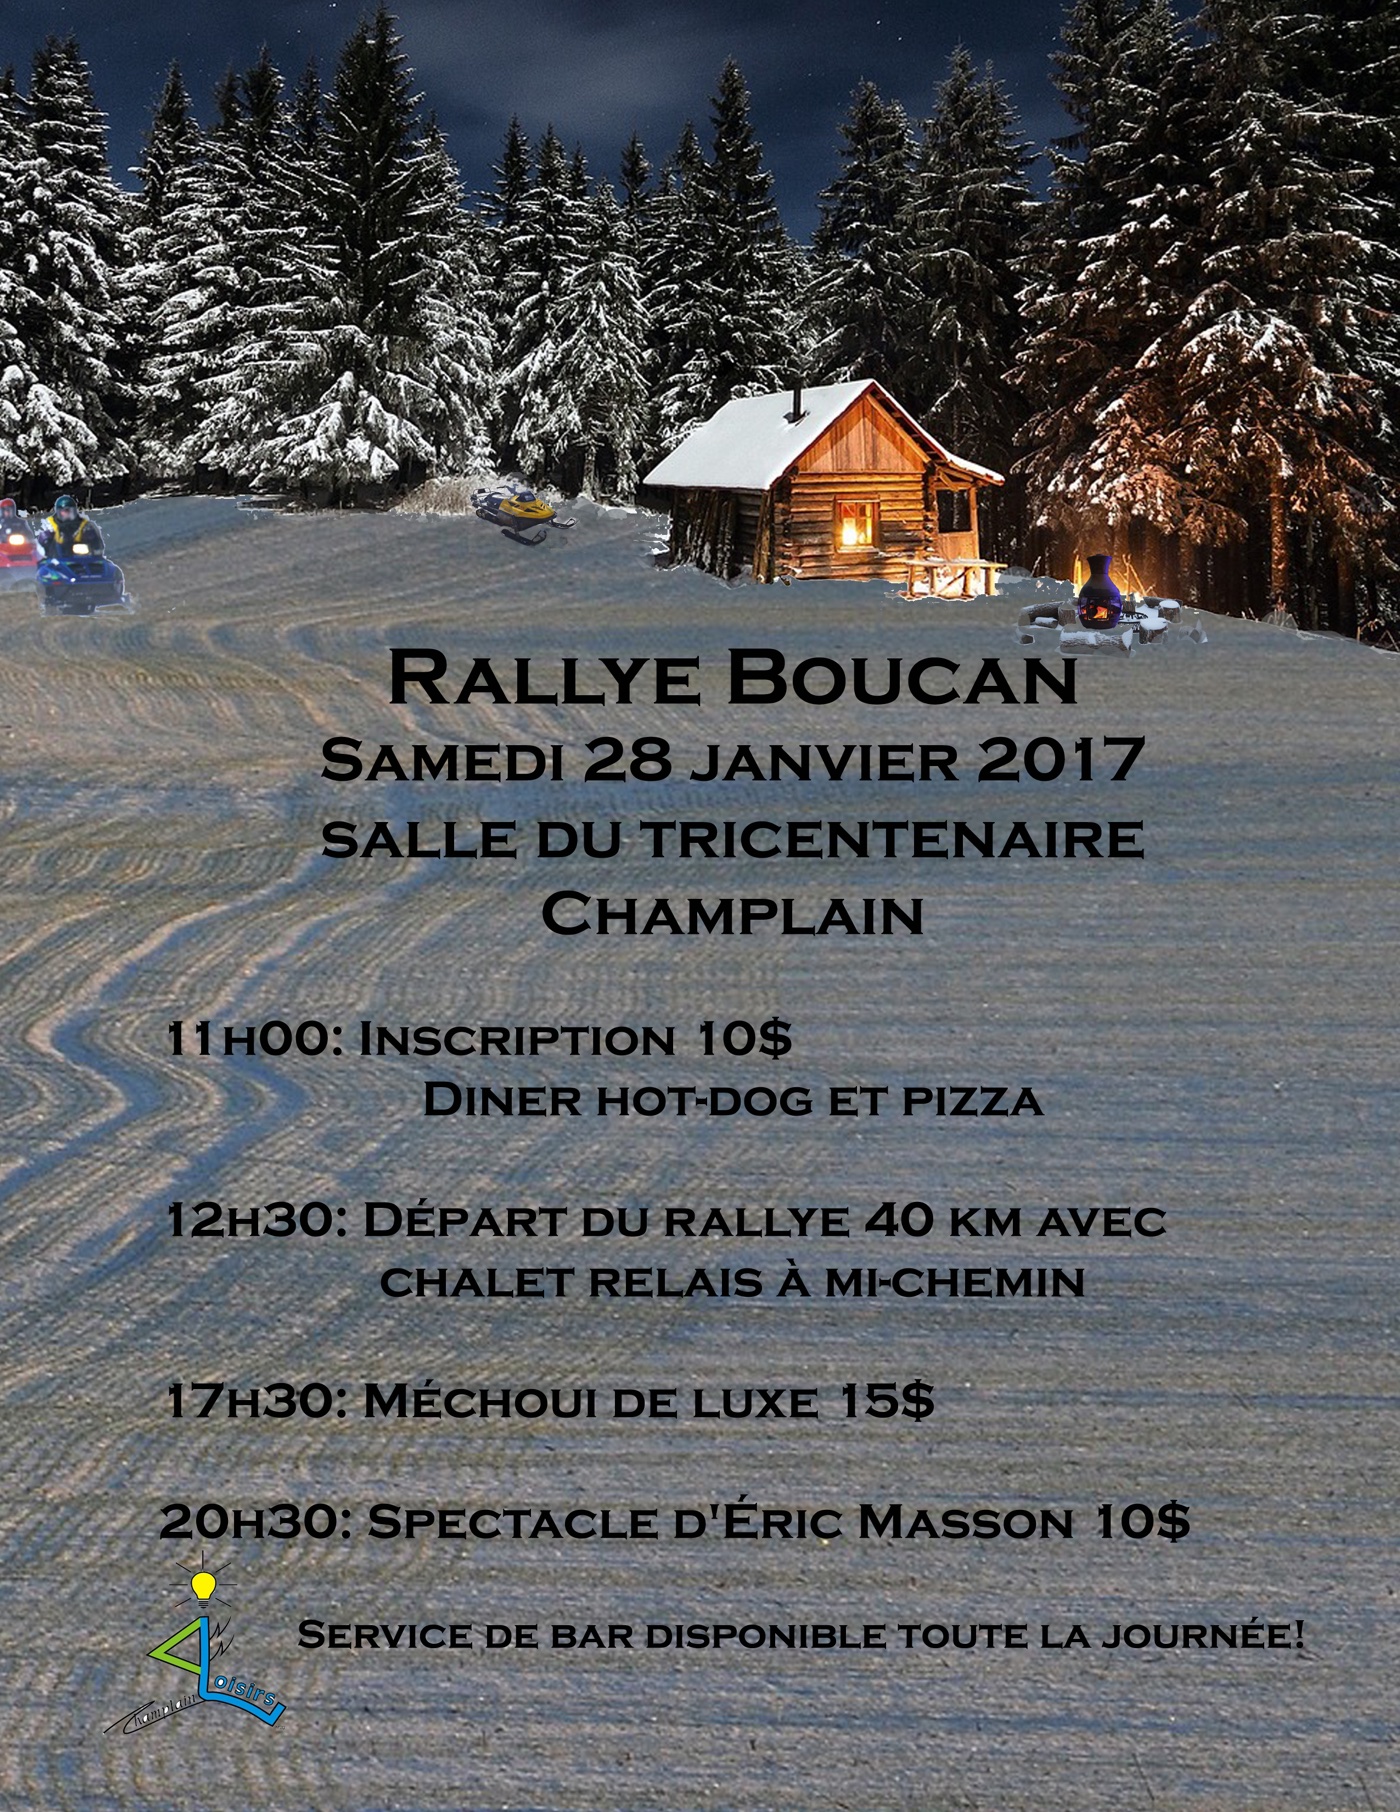 Rallye Boucan 2017